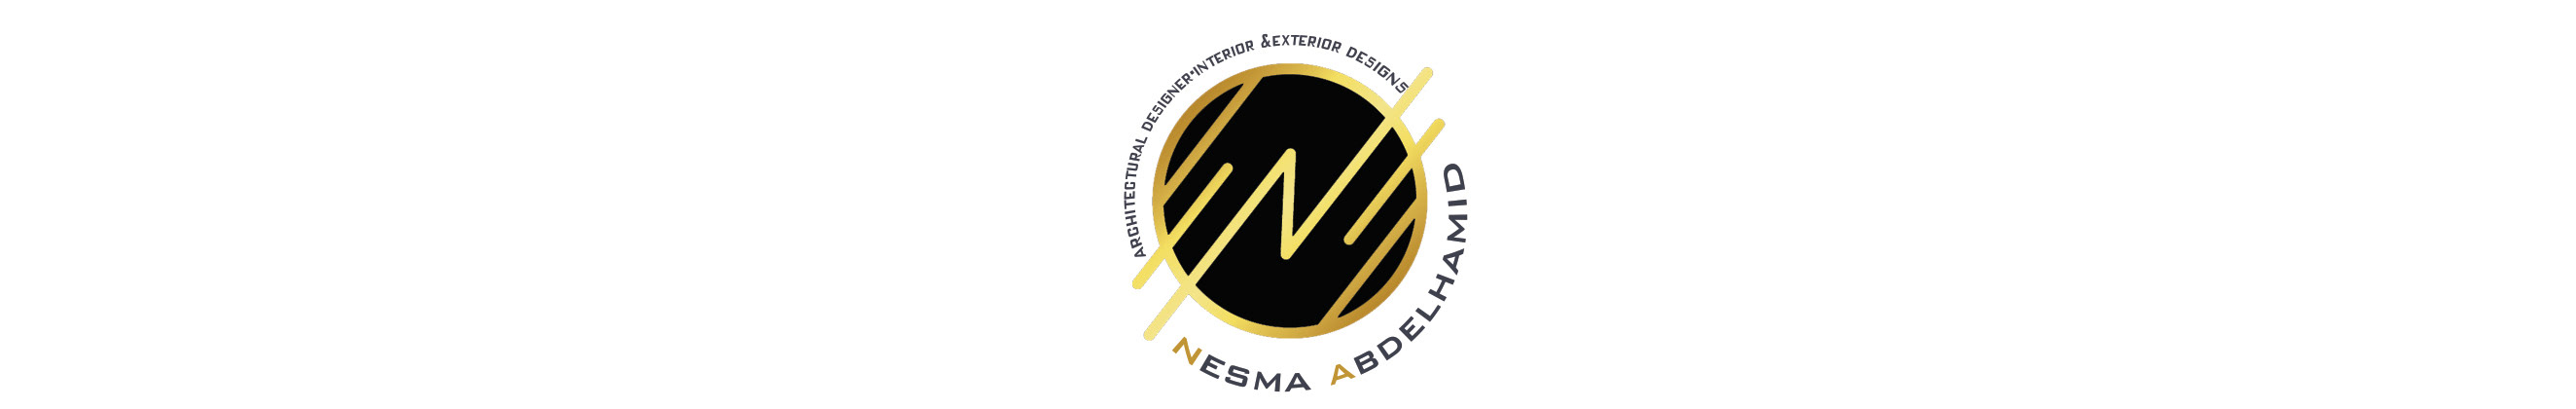 Nesma Abdelhamid's profile banner